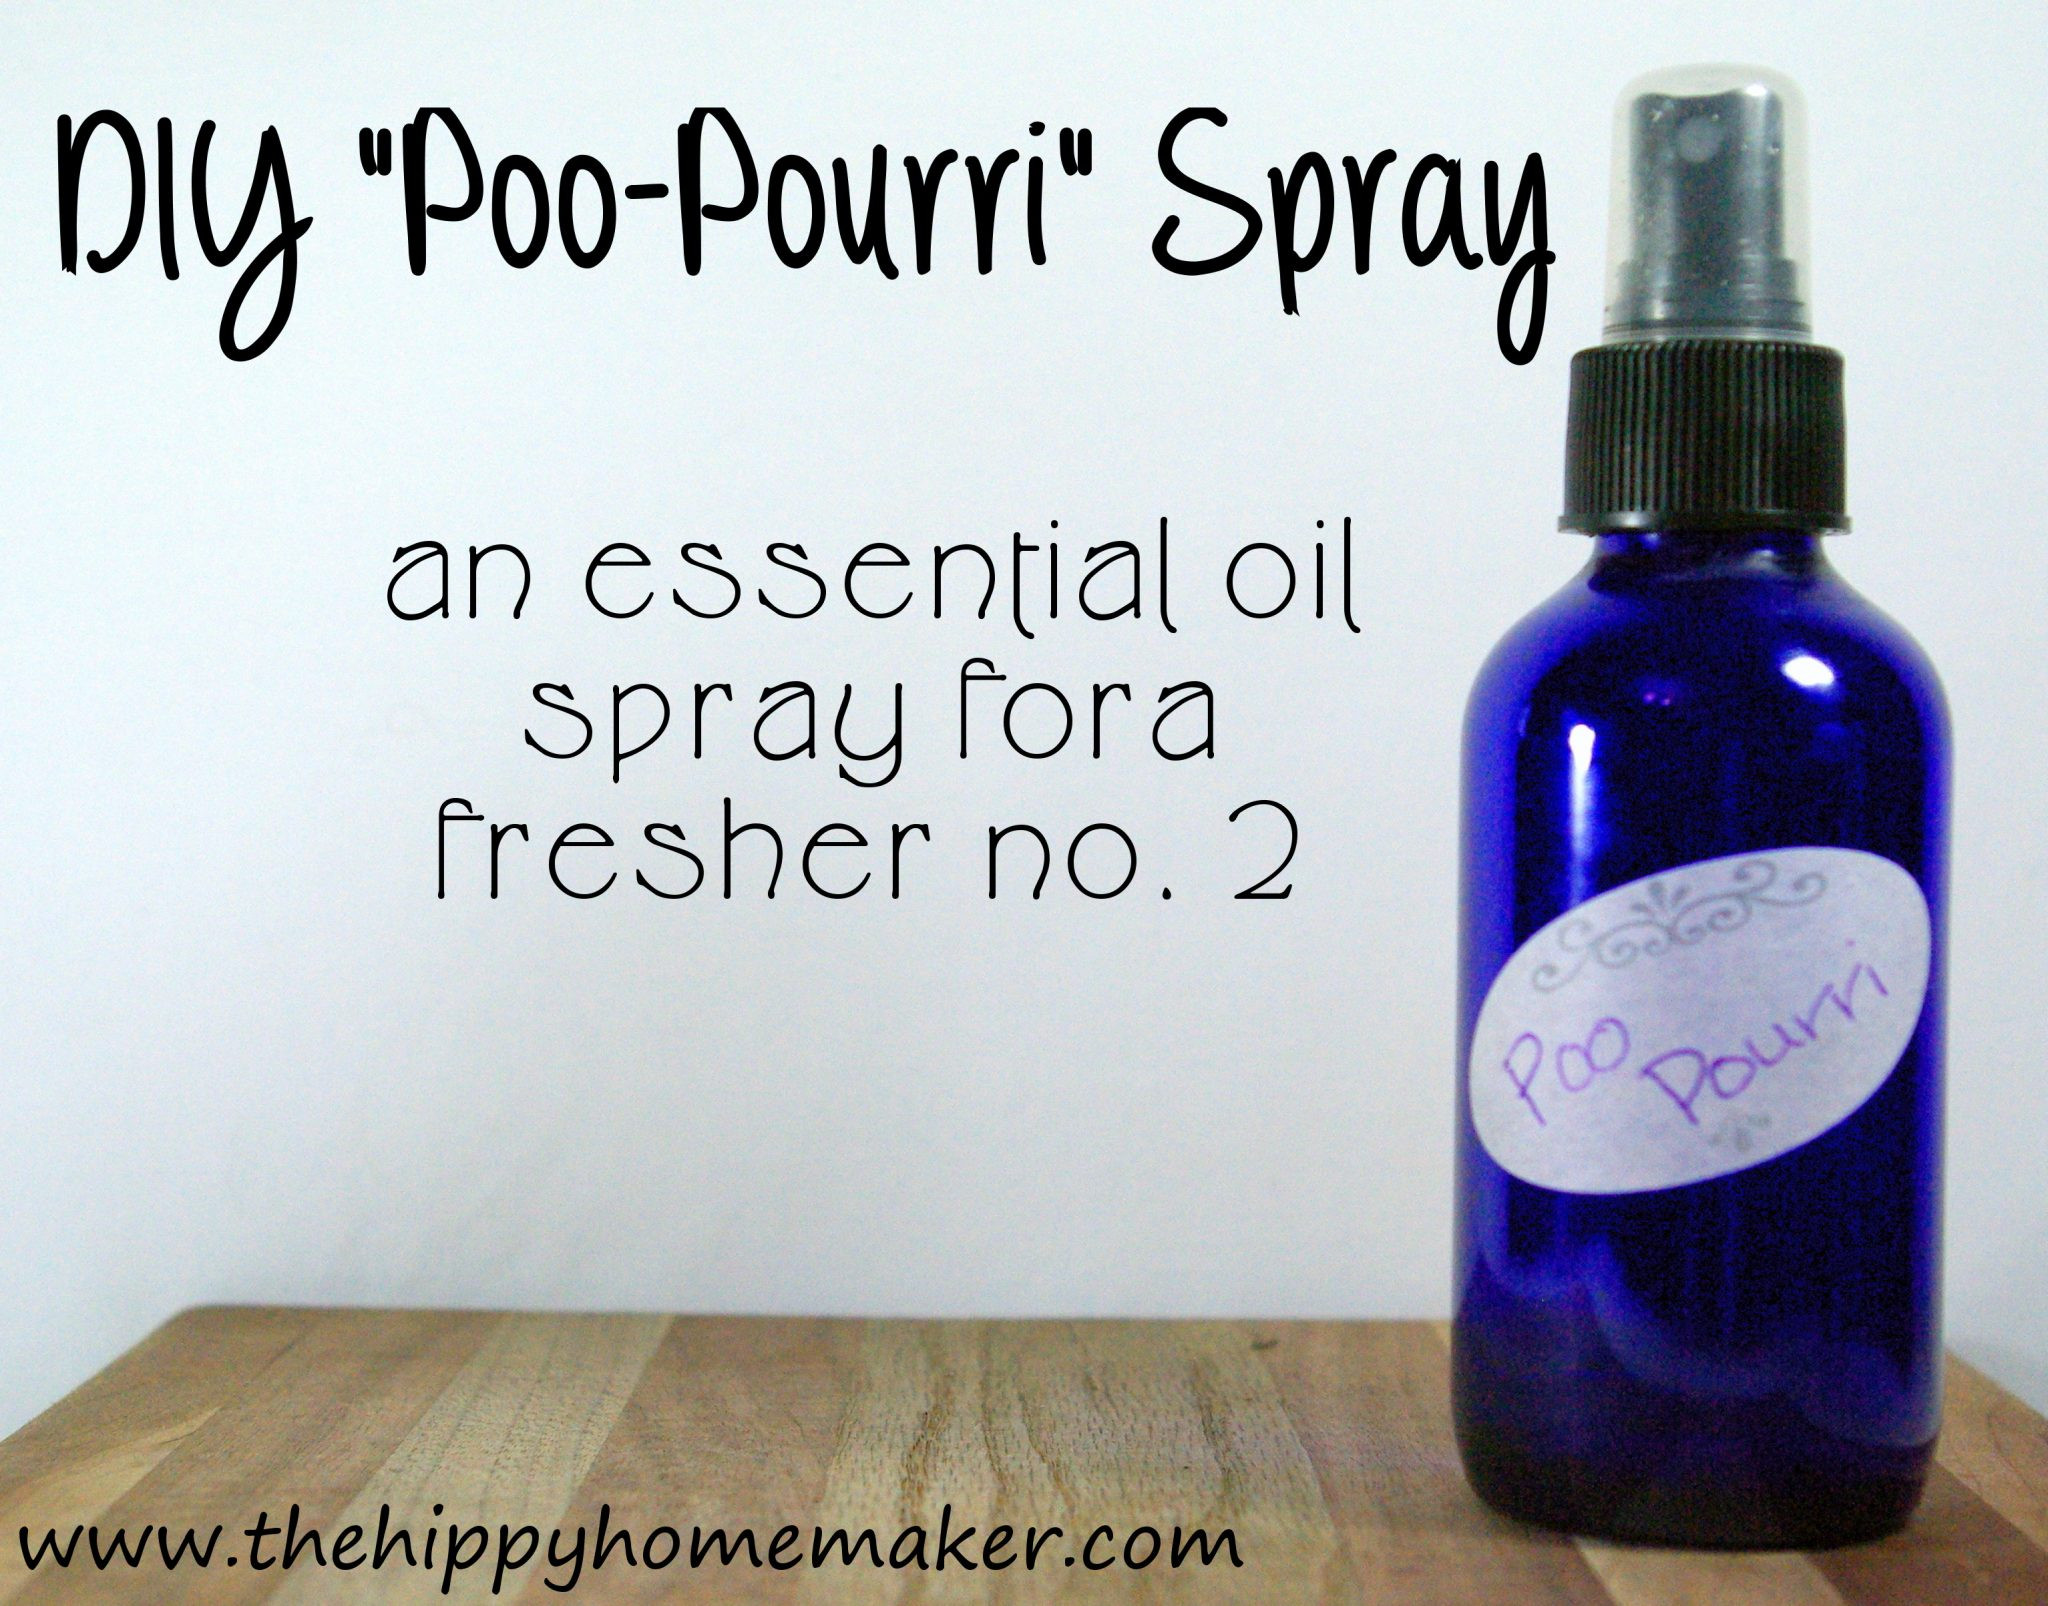 Best ideas about DIY Poo Spray
. Save or Pin DIY "Poo Pourri" Spray For a Fresher No 2 by Hybrid Rasta Now.